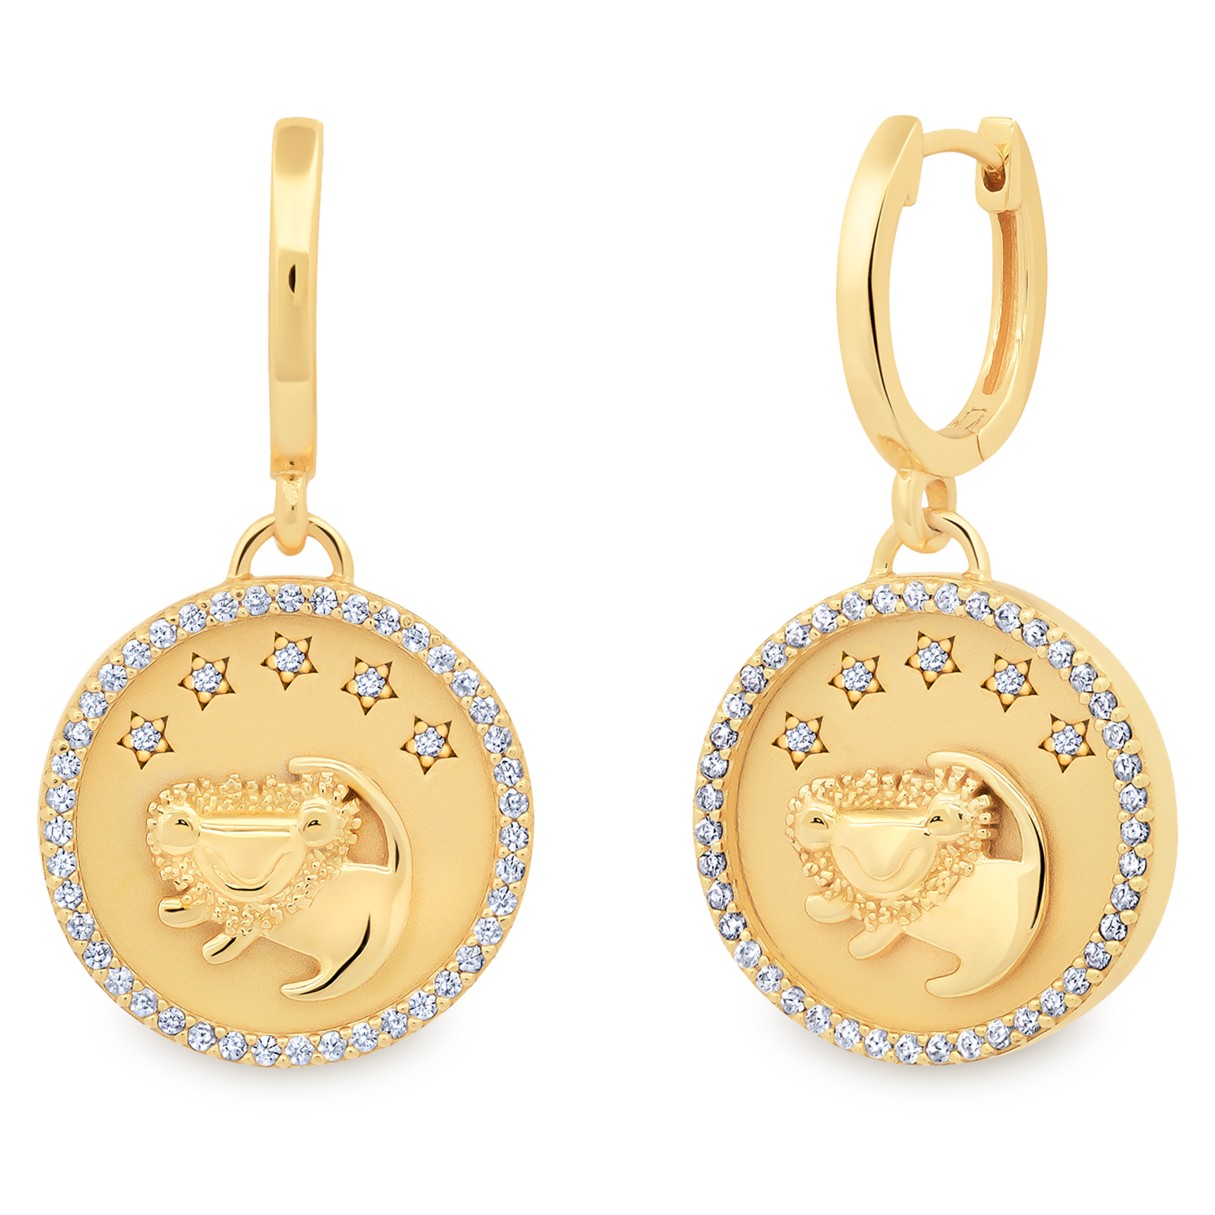 Simba Medallion Drop Earrings by CRISLU – The Lion King